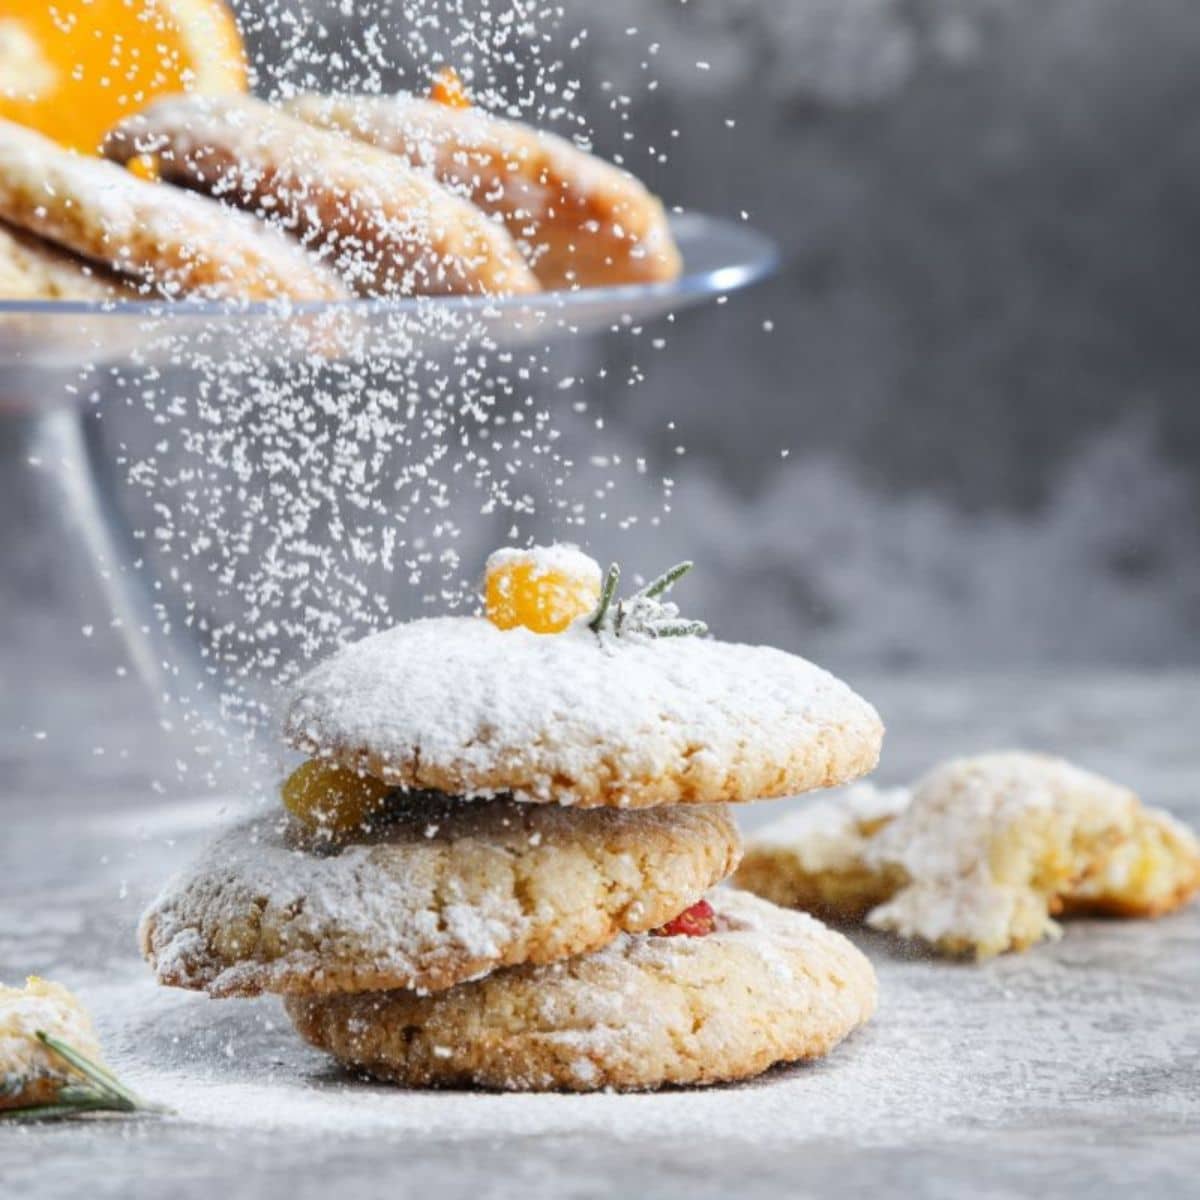 orange cookies on grey table with powdered sugar being sprinkled on them